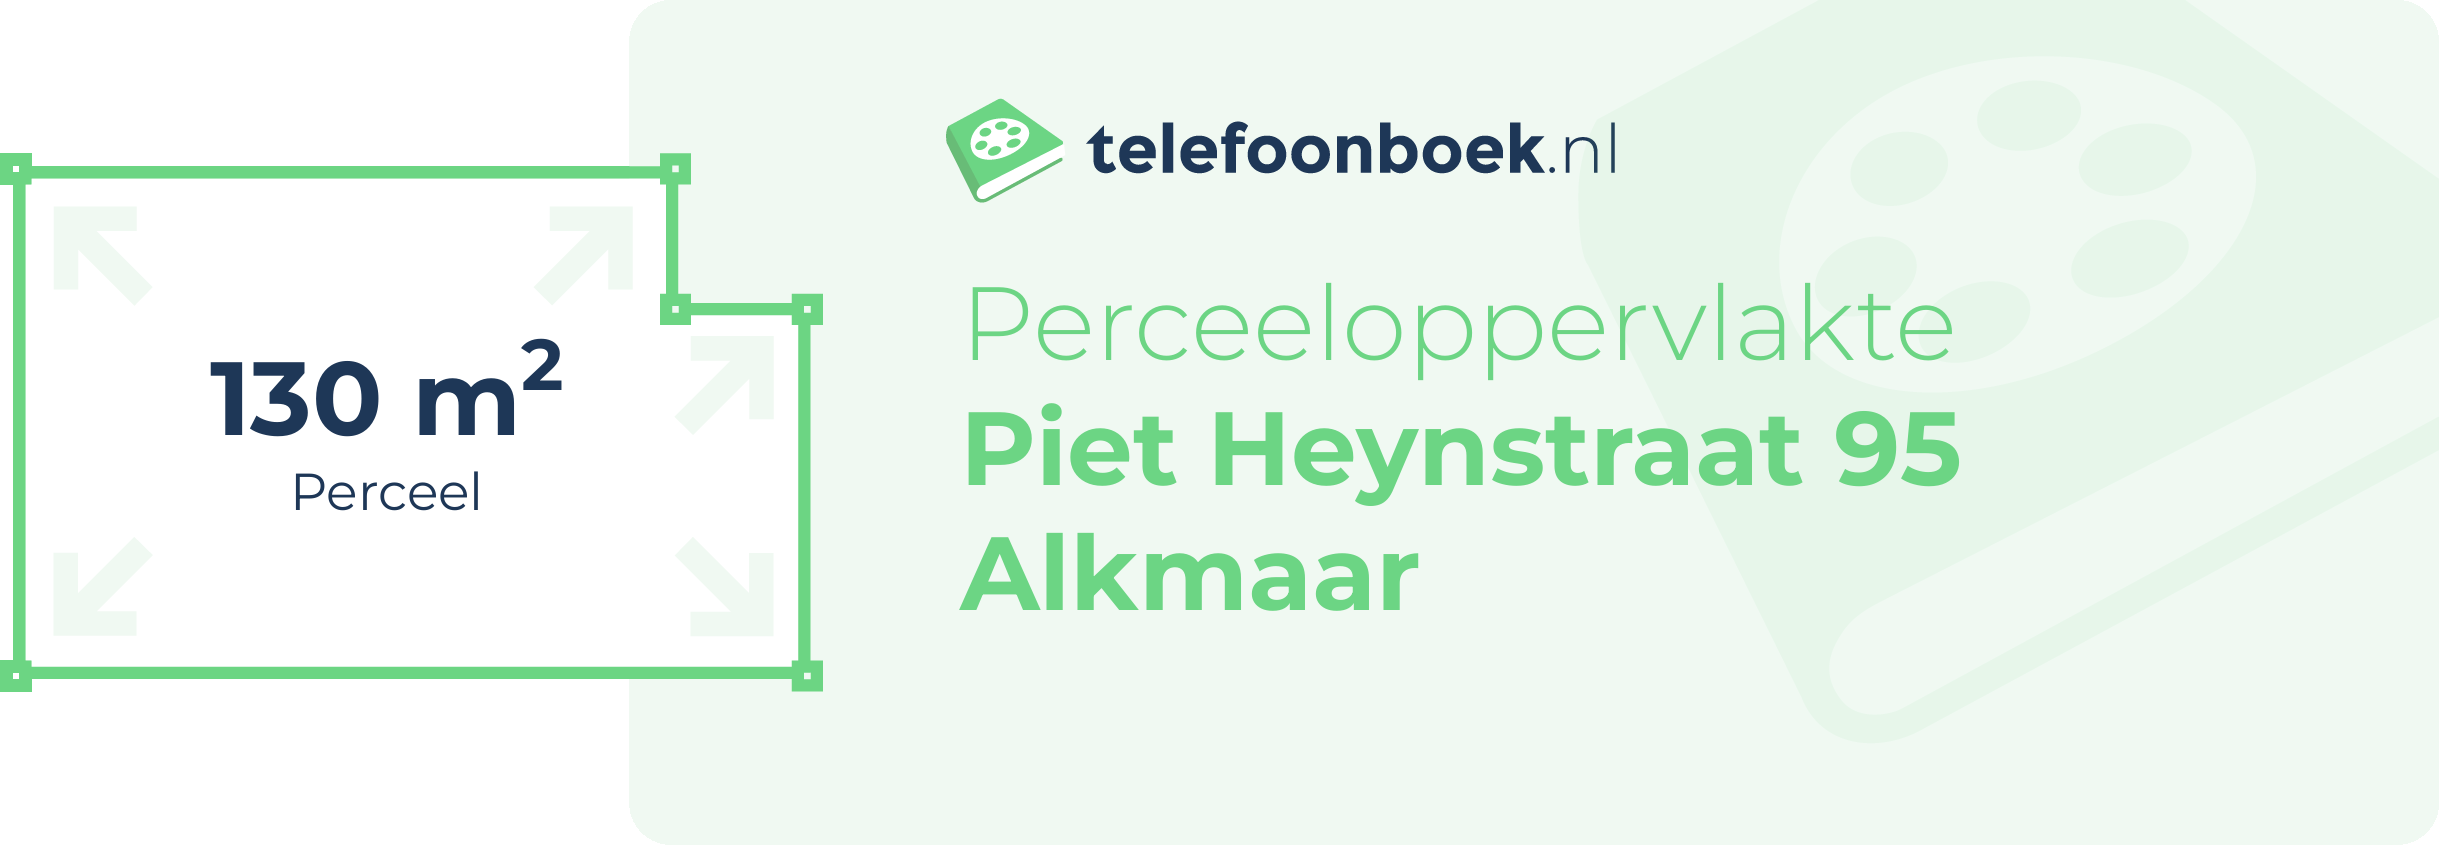 Perceeloppervlakte Piet Heynstraat 95 Alkmaar